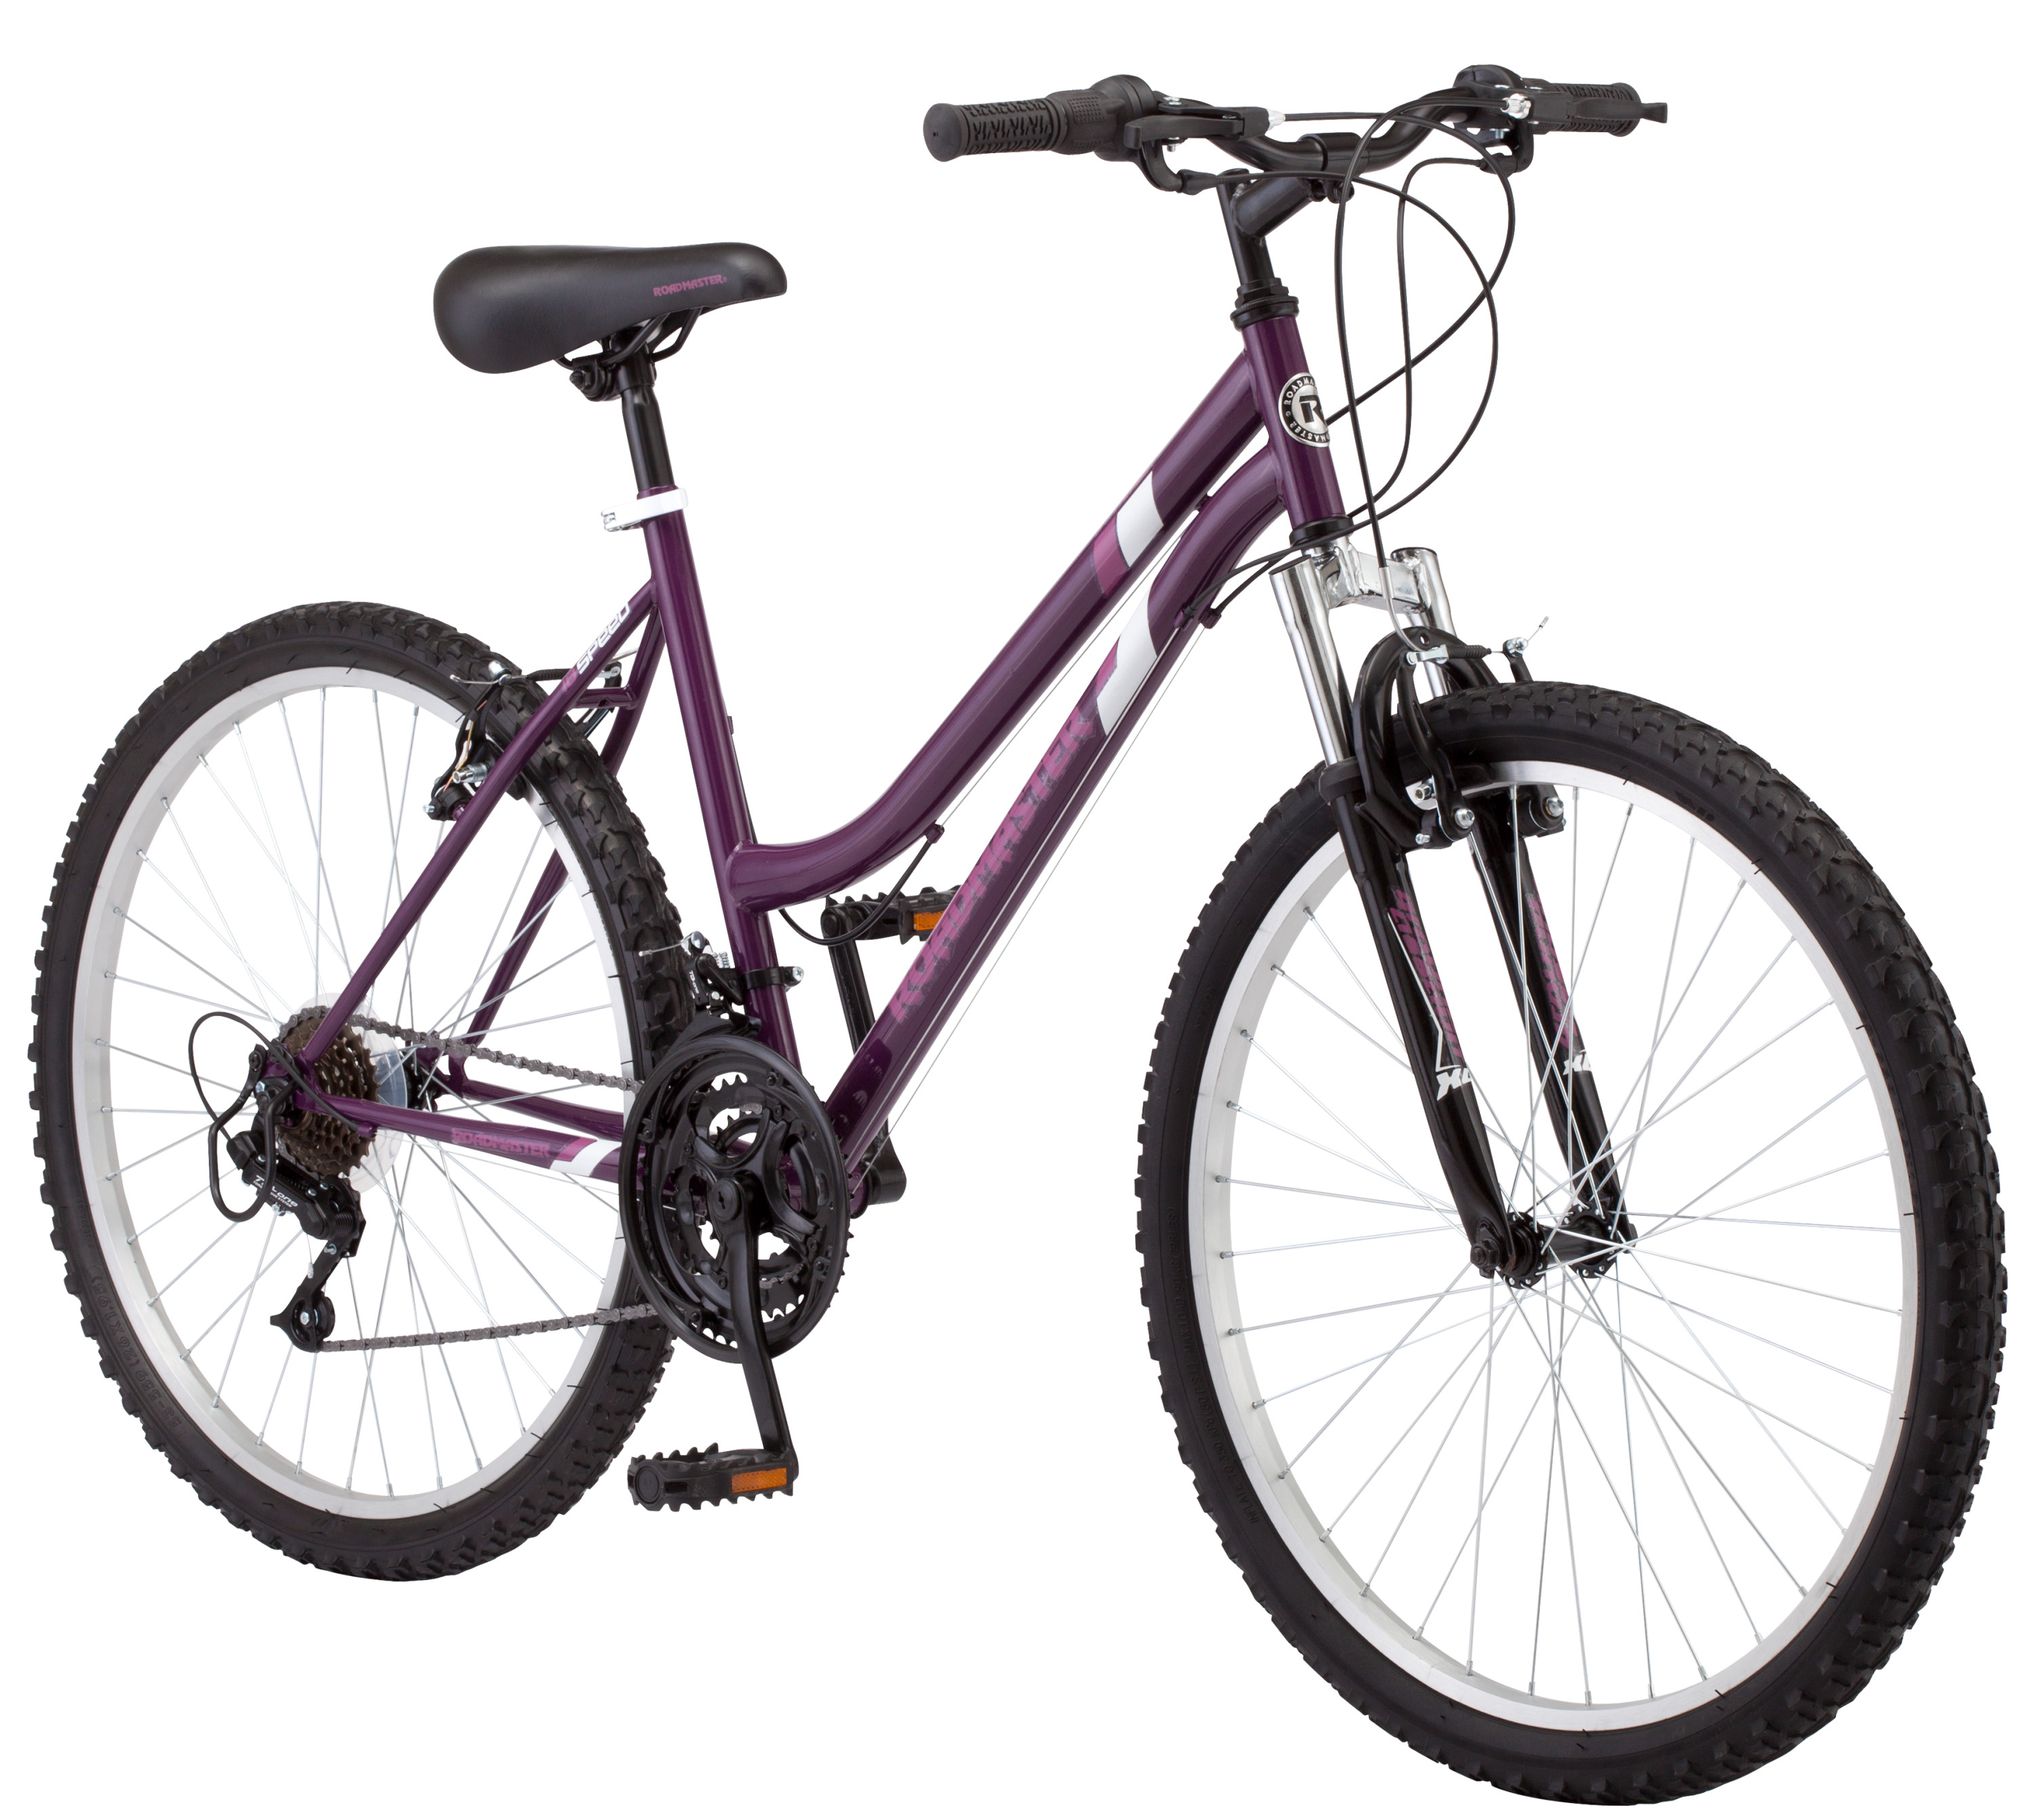 Roadmaster Granite Peak Women's Mountain Bike, 26" wheels Purple - image 2 of 7